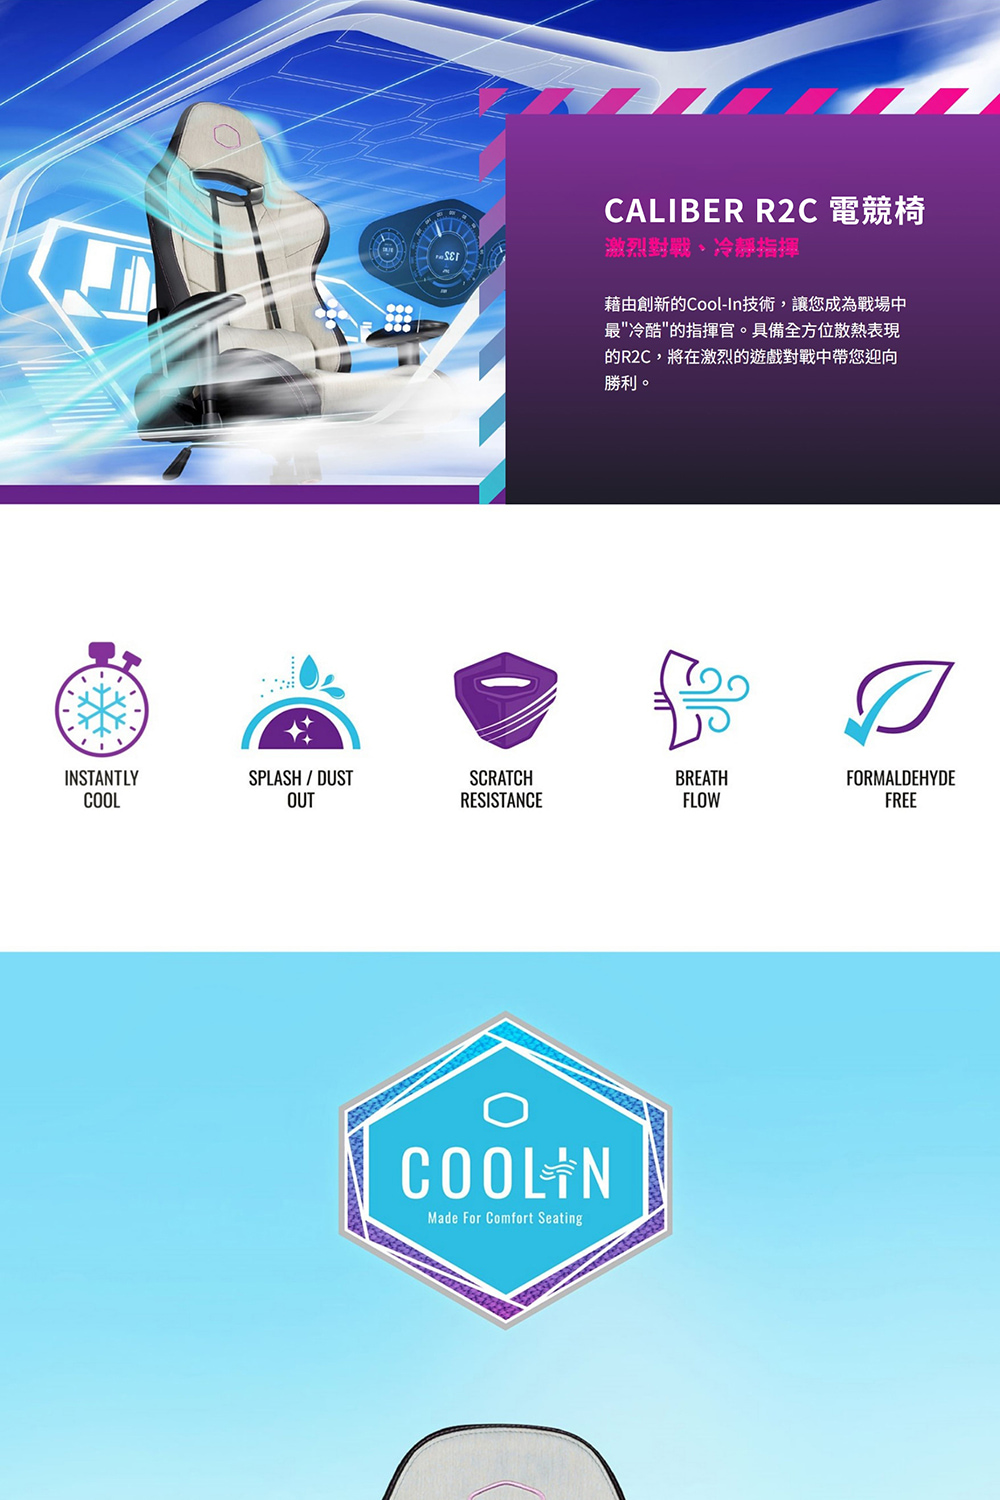 CoolerMaster CALIBER R2C 涼感設計電